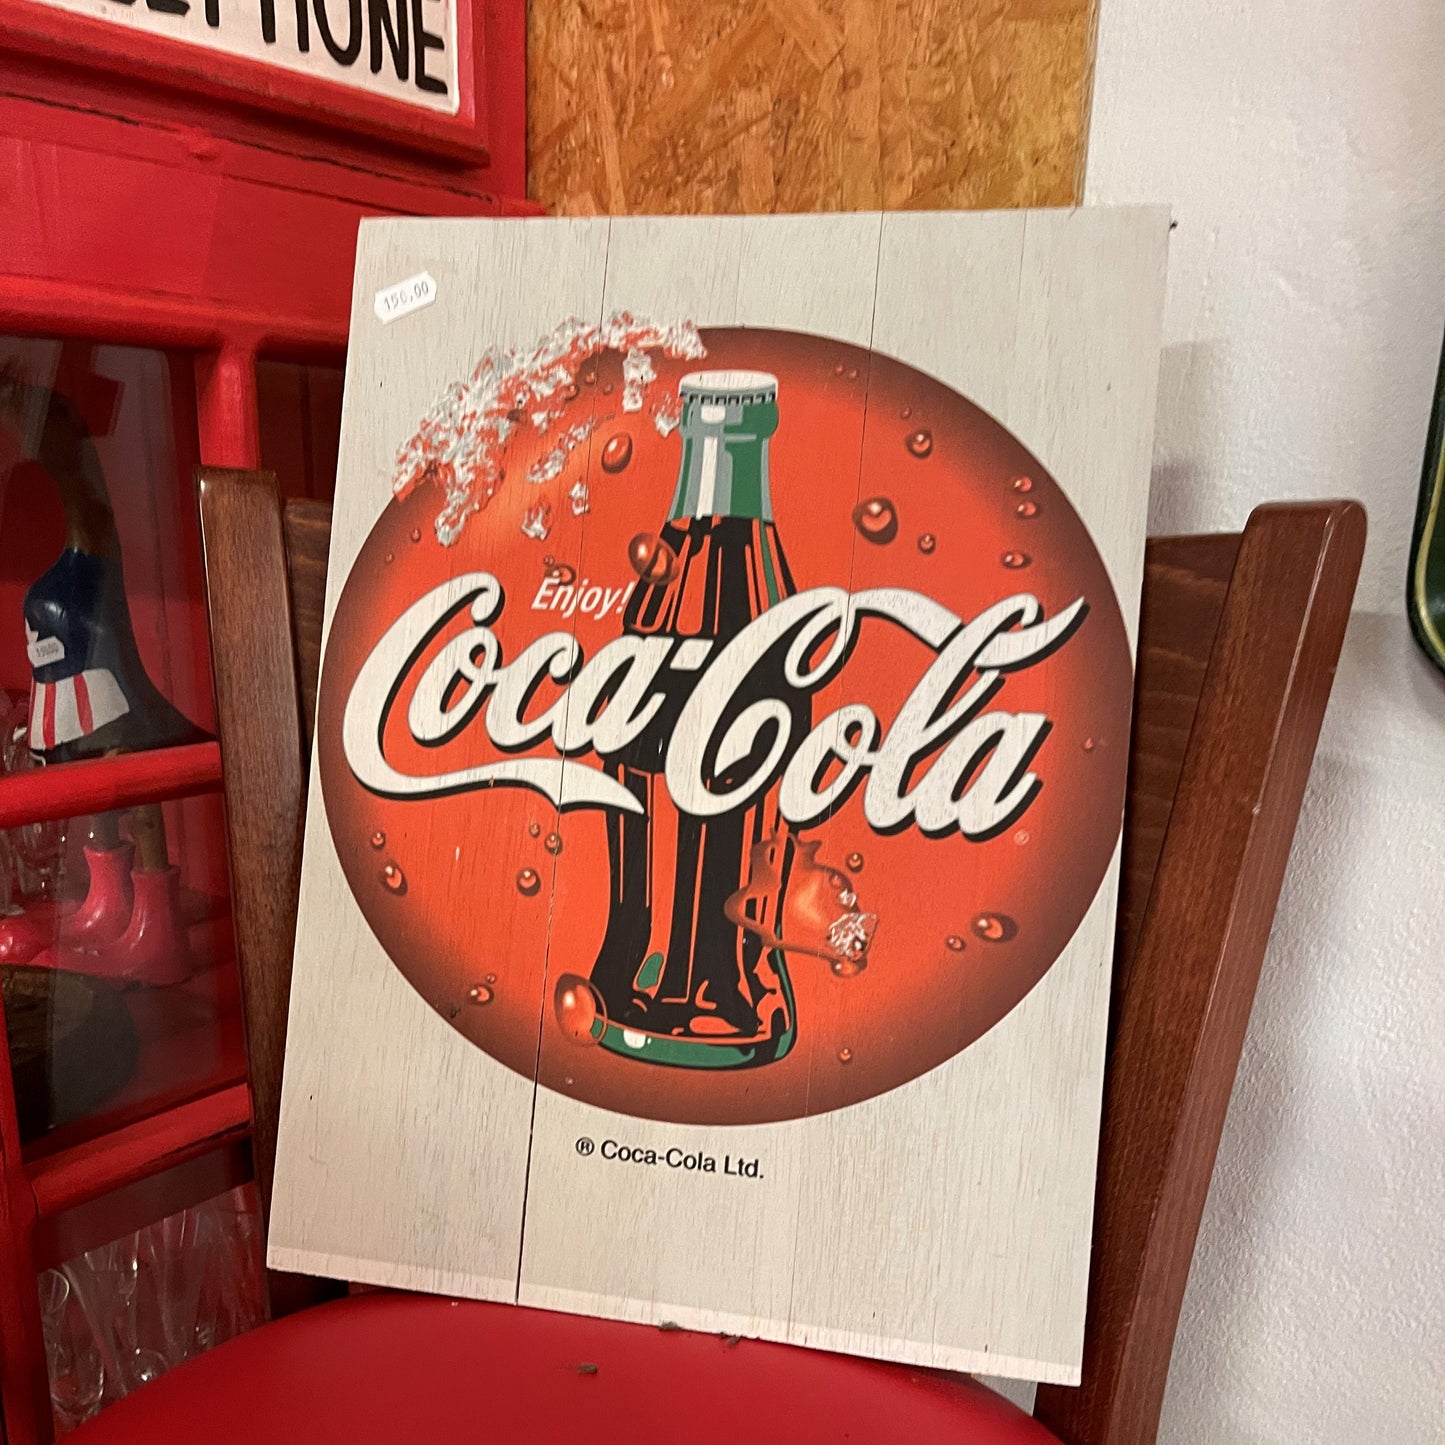 Coca Cola træskilt